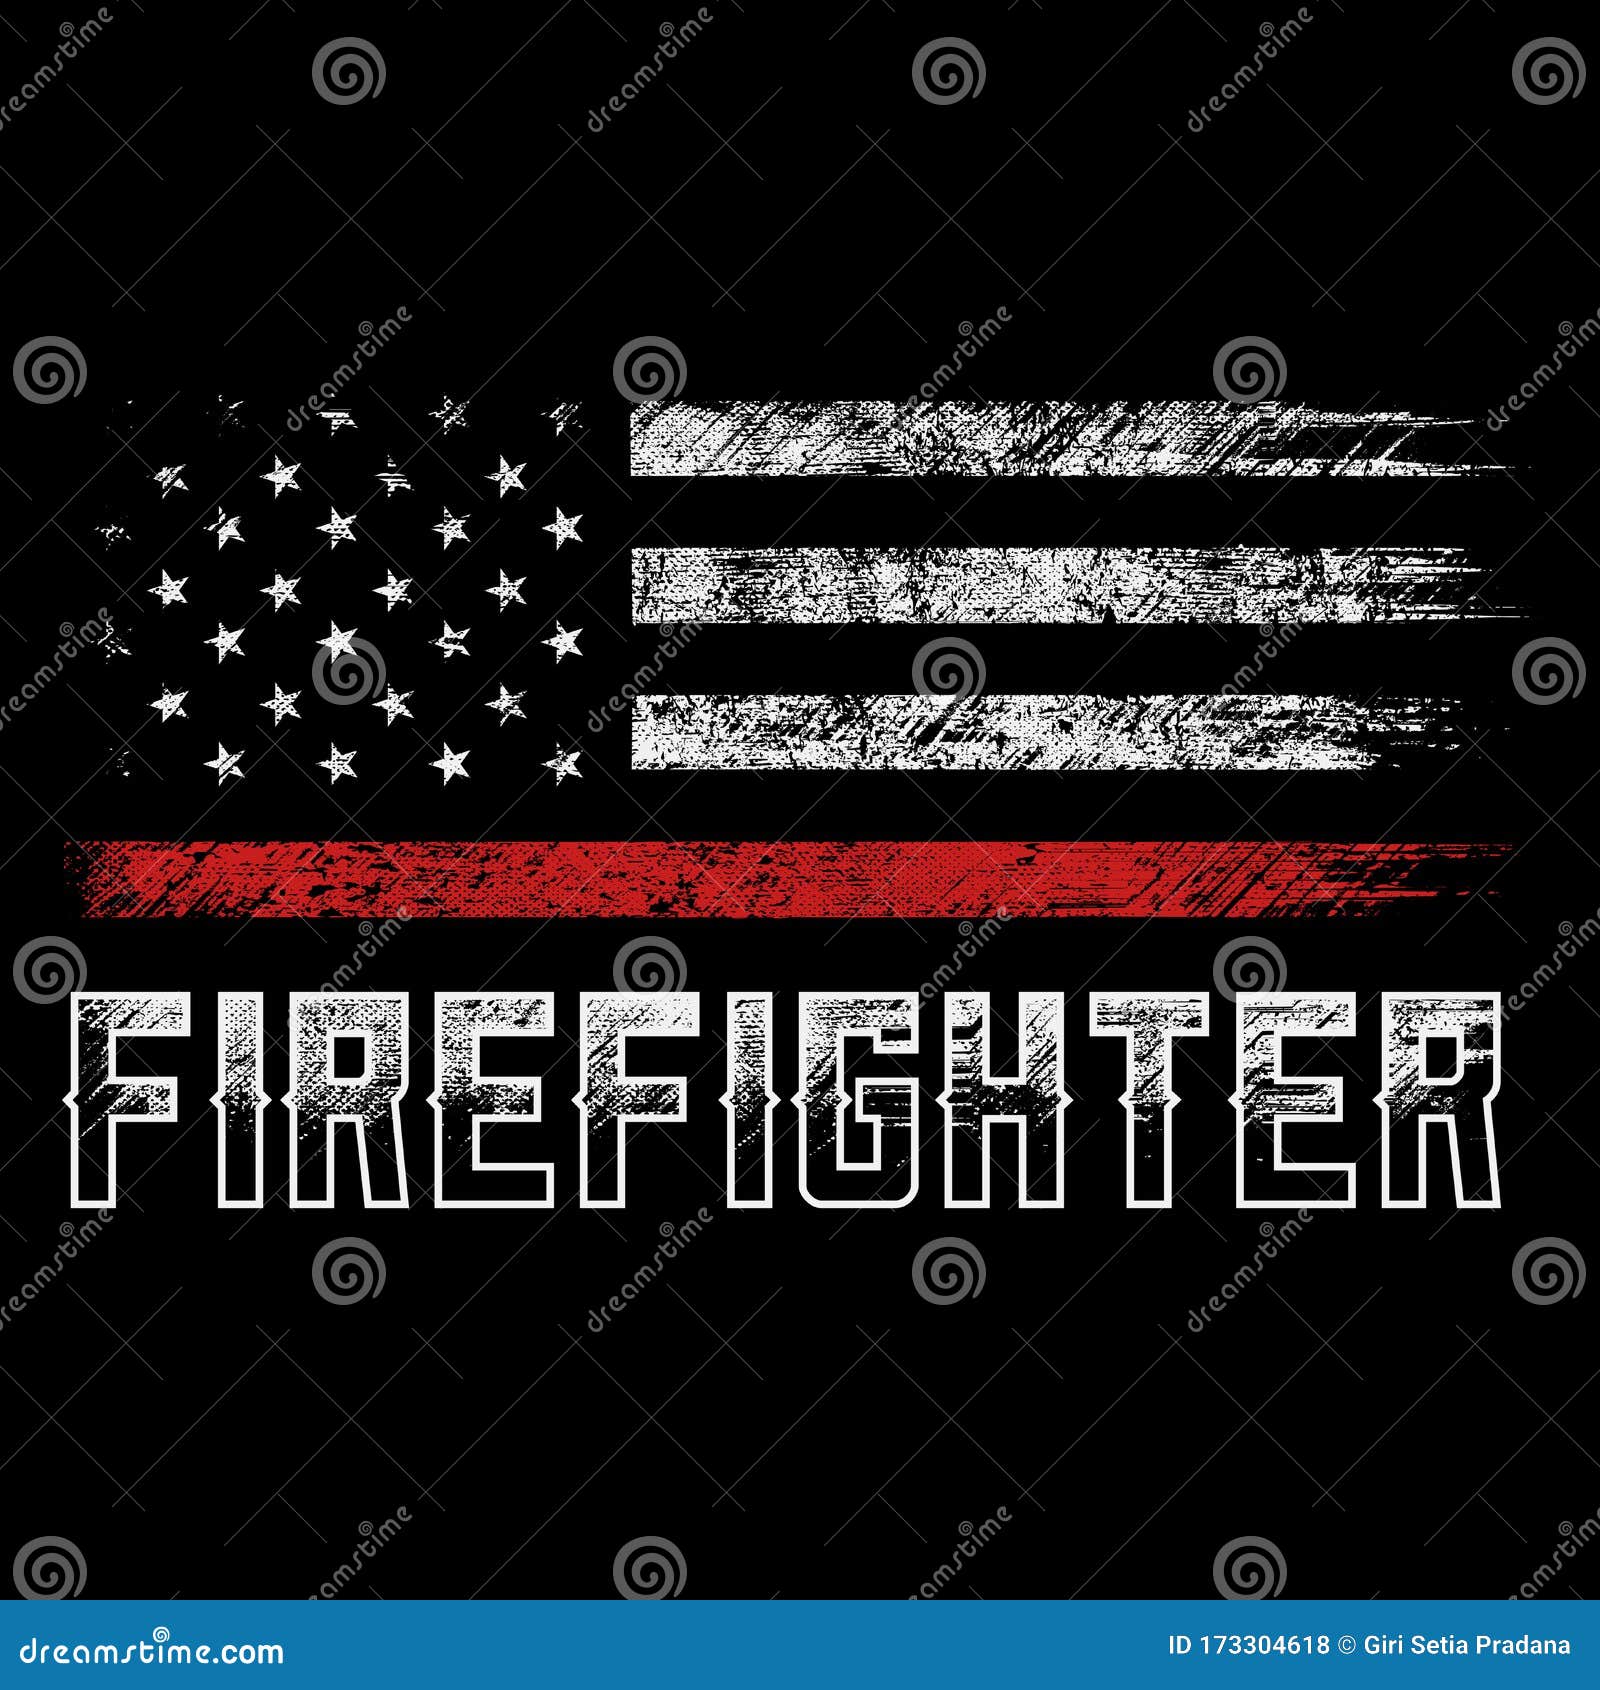 firefighter logo wallpaper  Google Search  Fire department Firefighter  Maltese cross